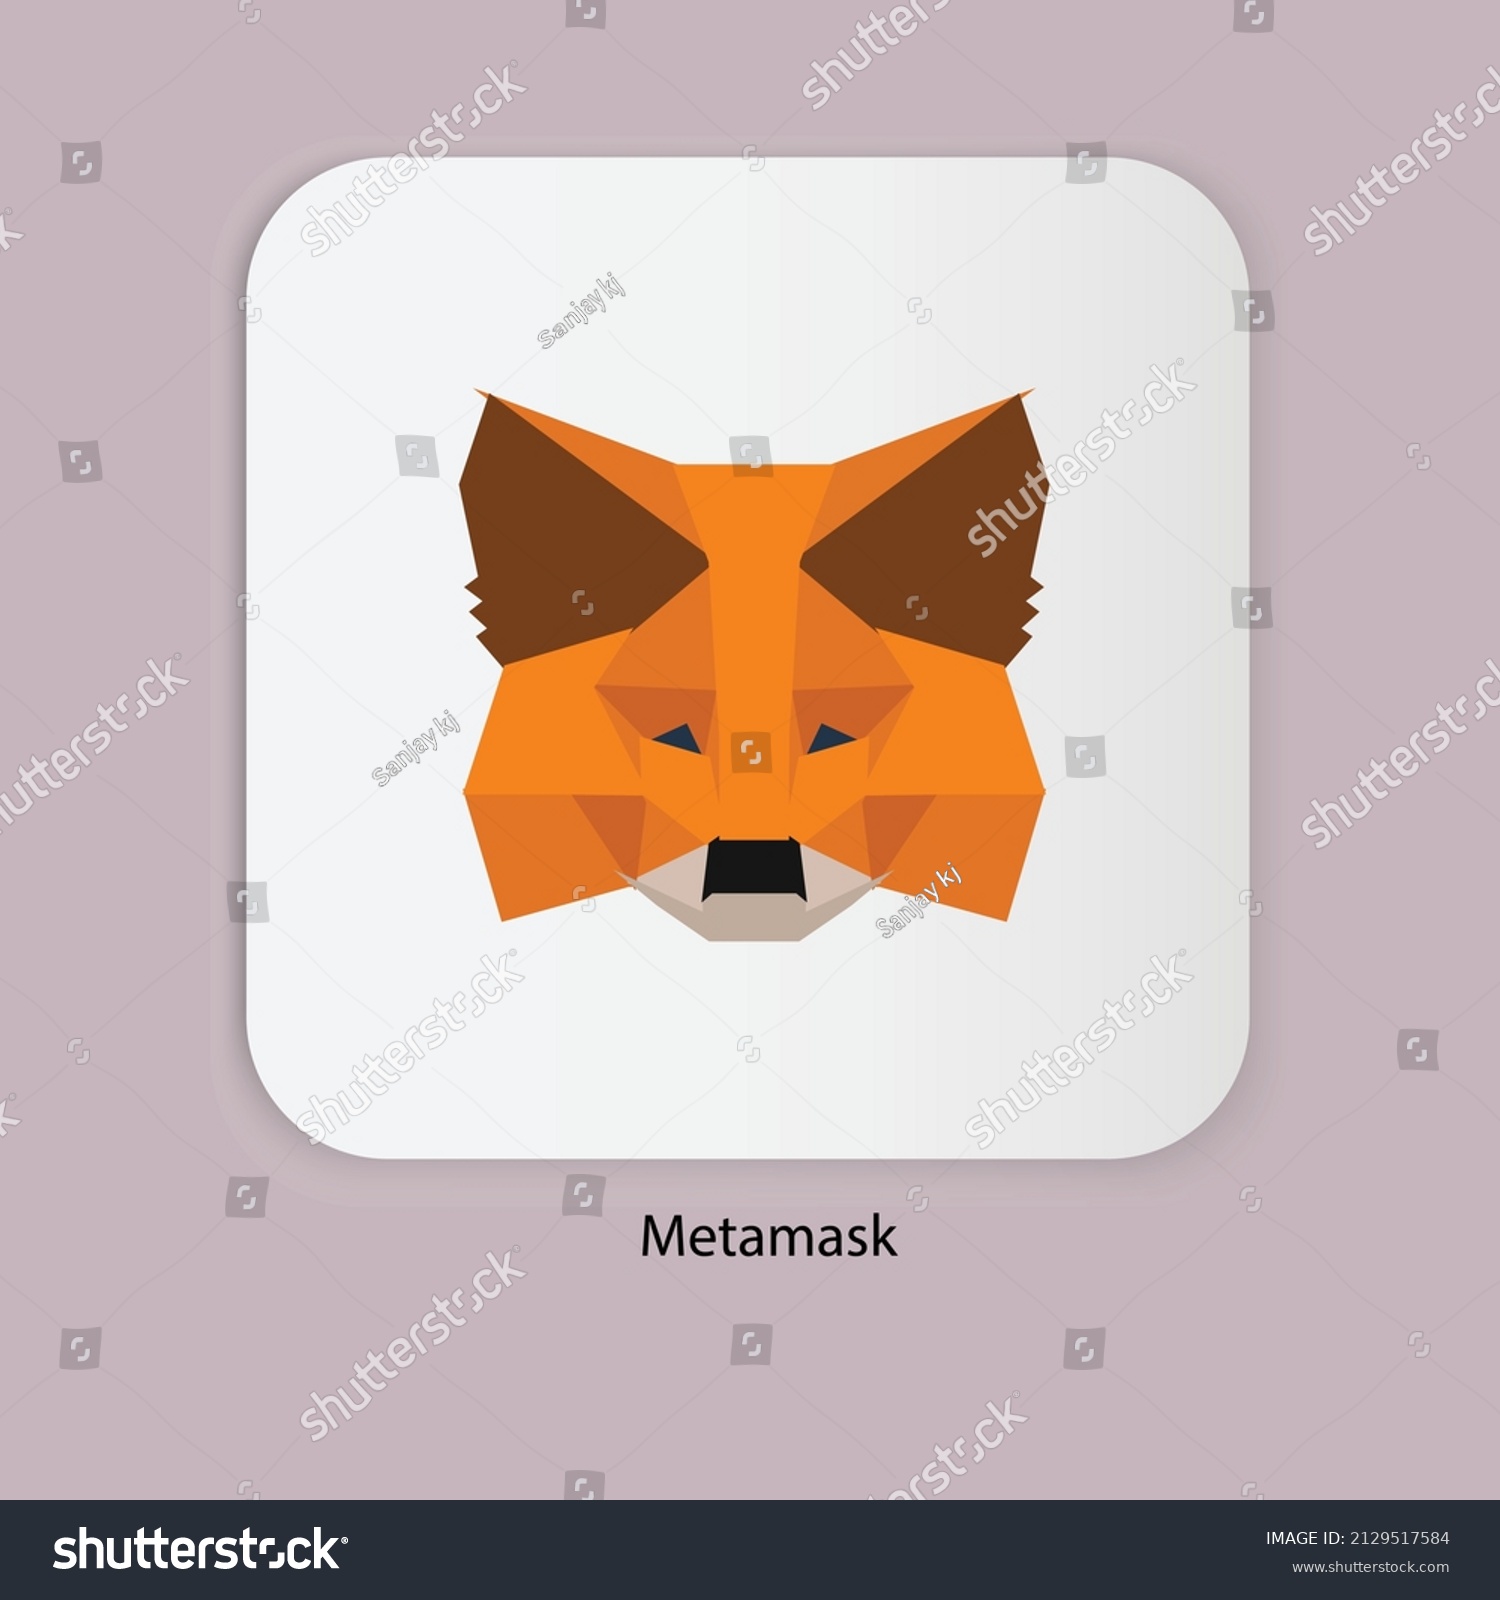 SVG of Vector illustration of Metamask logo isolated on white background.  svg